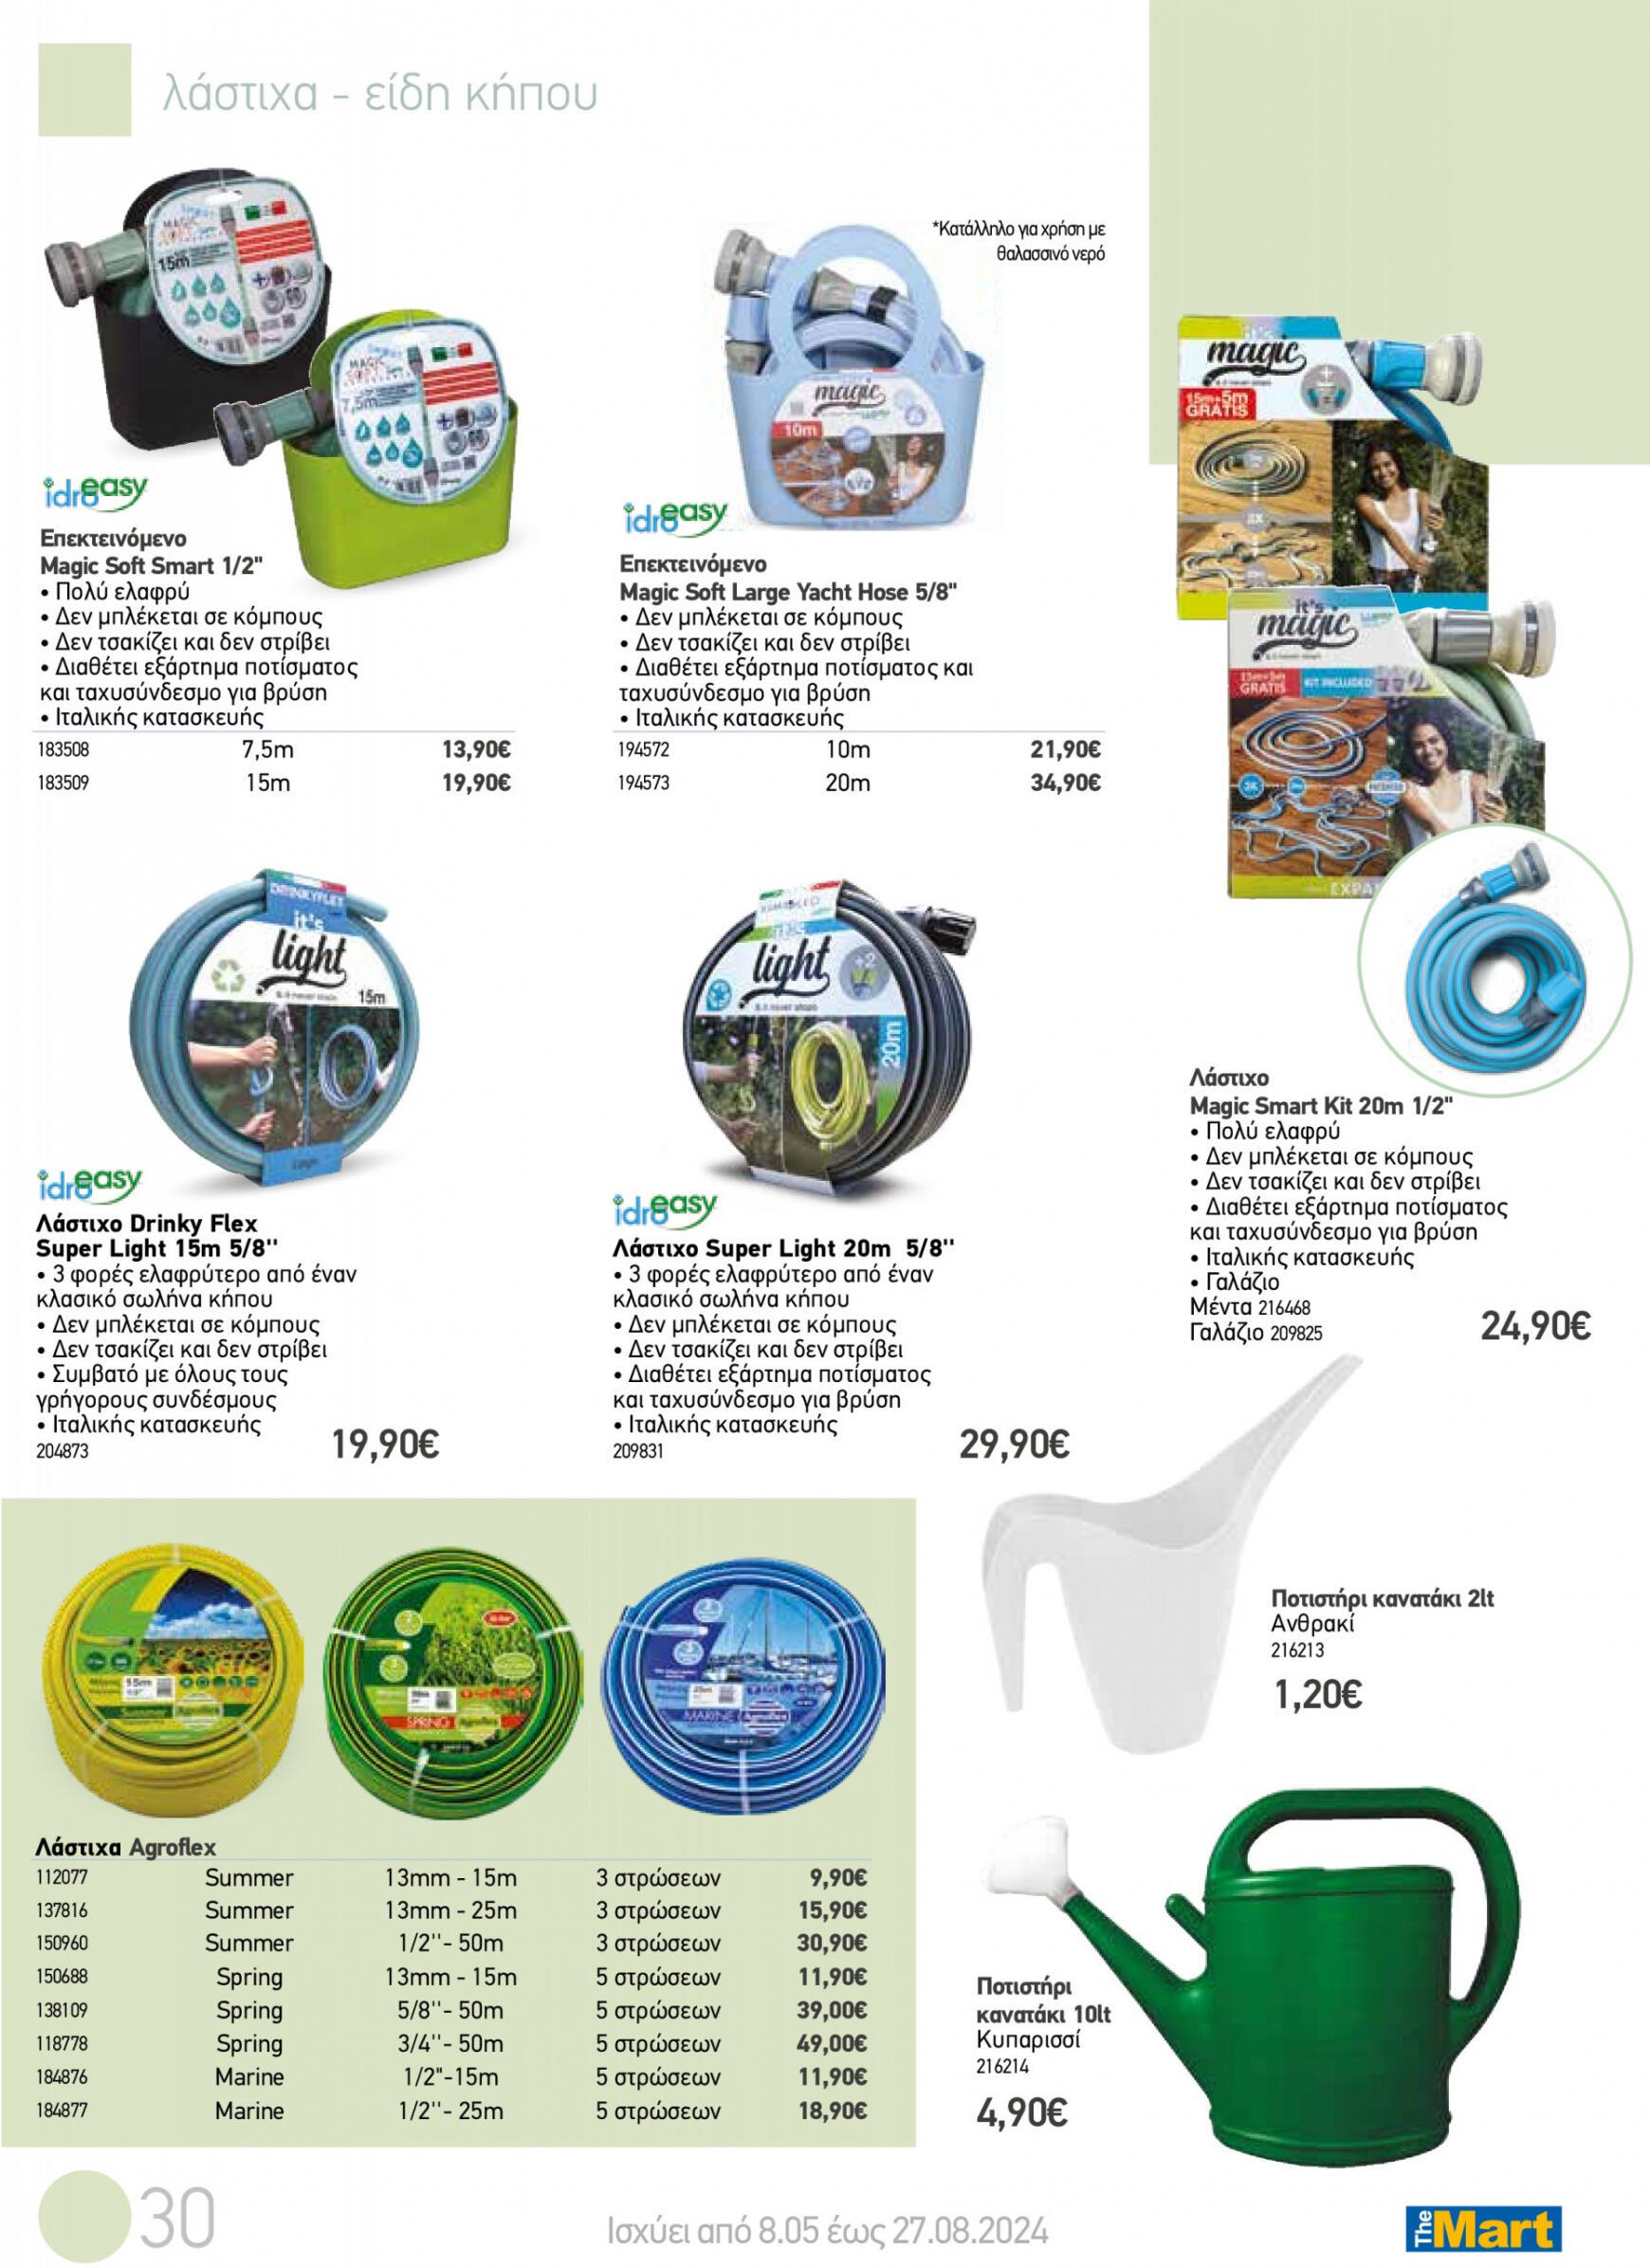 the-mart - The Mart - Κατάλογος Προϊόντων Εξωτερικού Χώρου φυλλάδιο ρεύματος 08/05 - 27/08 - page: 30